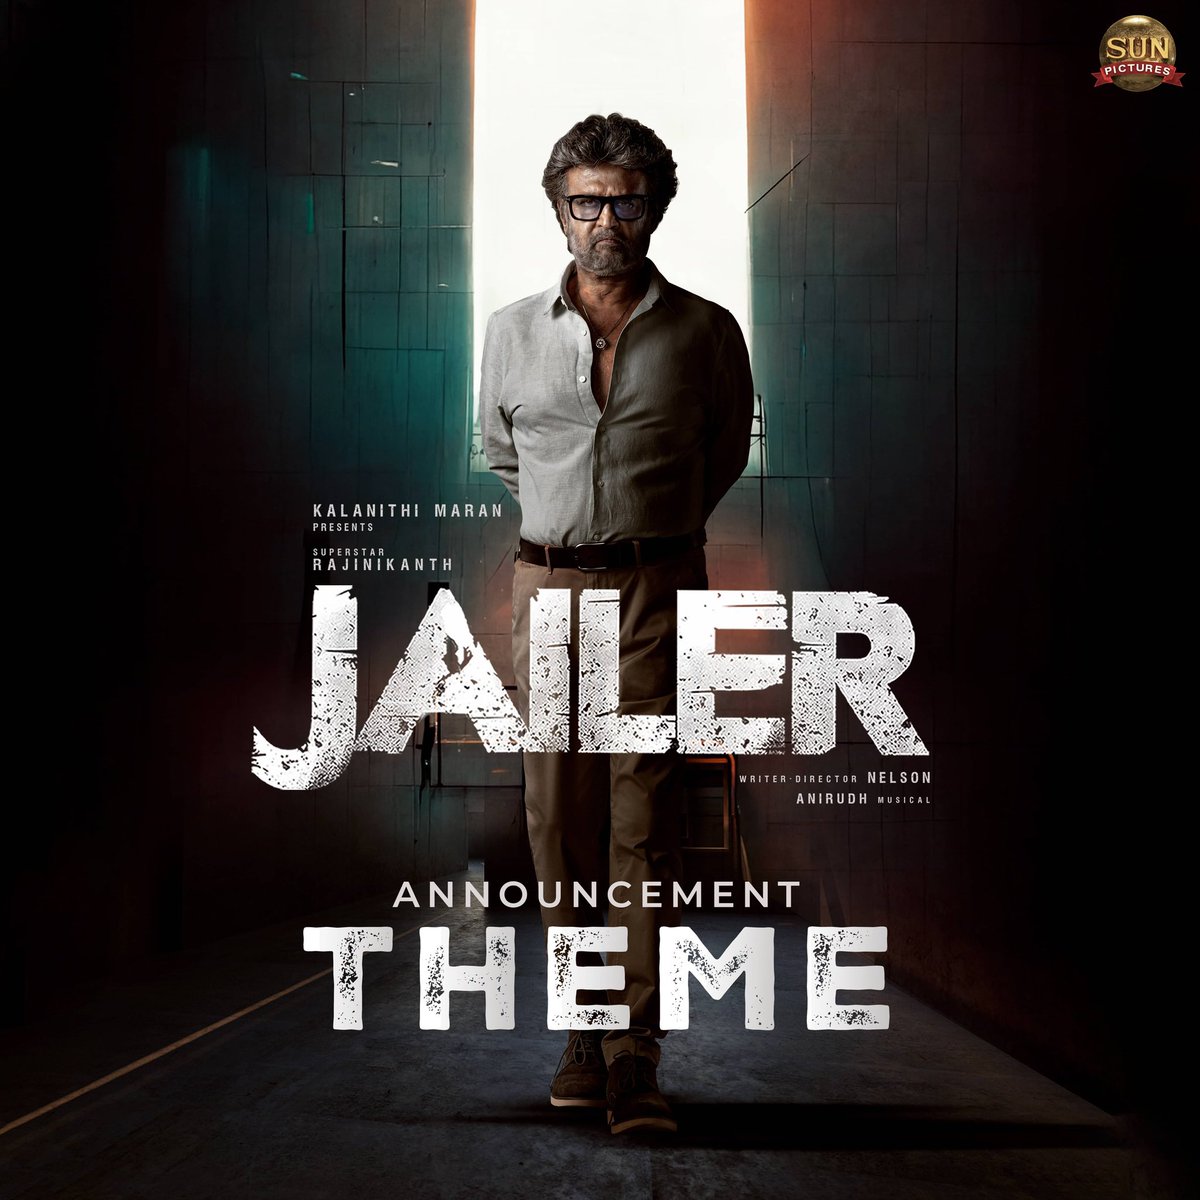 #JailerTheme Announcement Music now available in HD for you guys 🔥🔥🔥 linktr.ee/jailertheme Thalaivar @rajinikanth @Nelsondilpkumar @sunpictures 💥💥💥